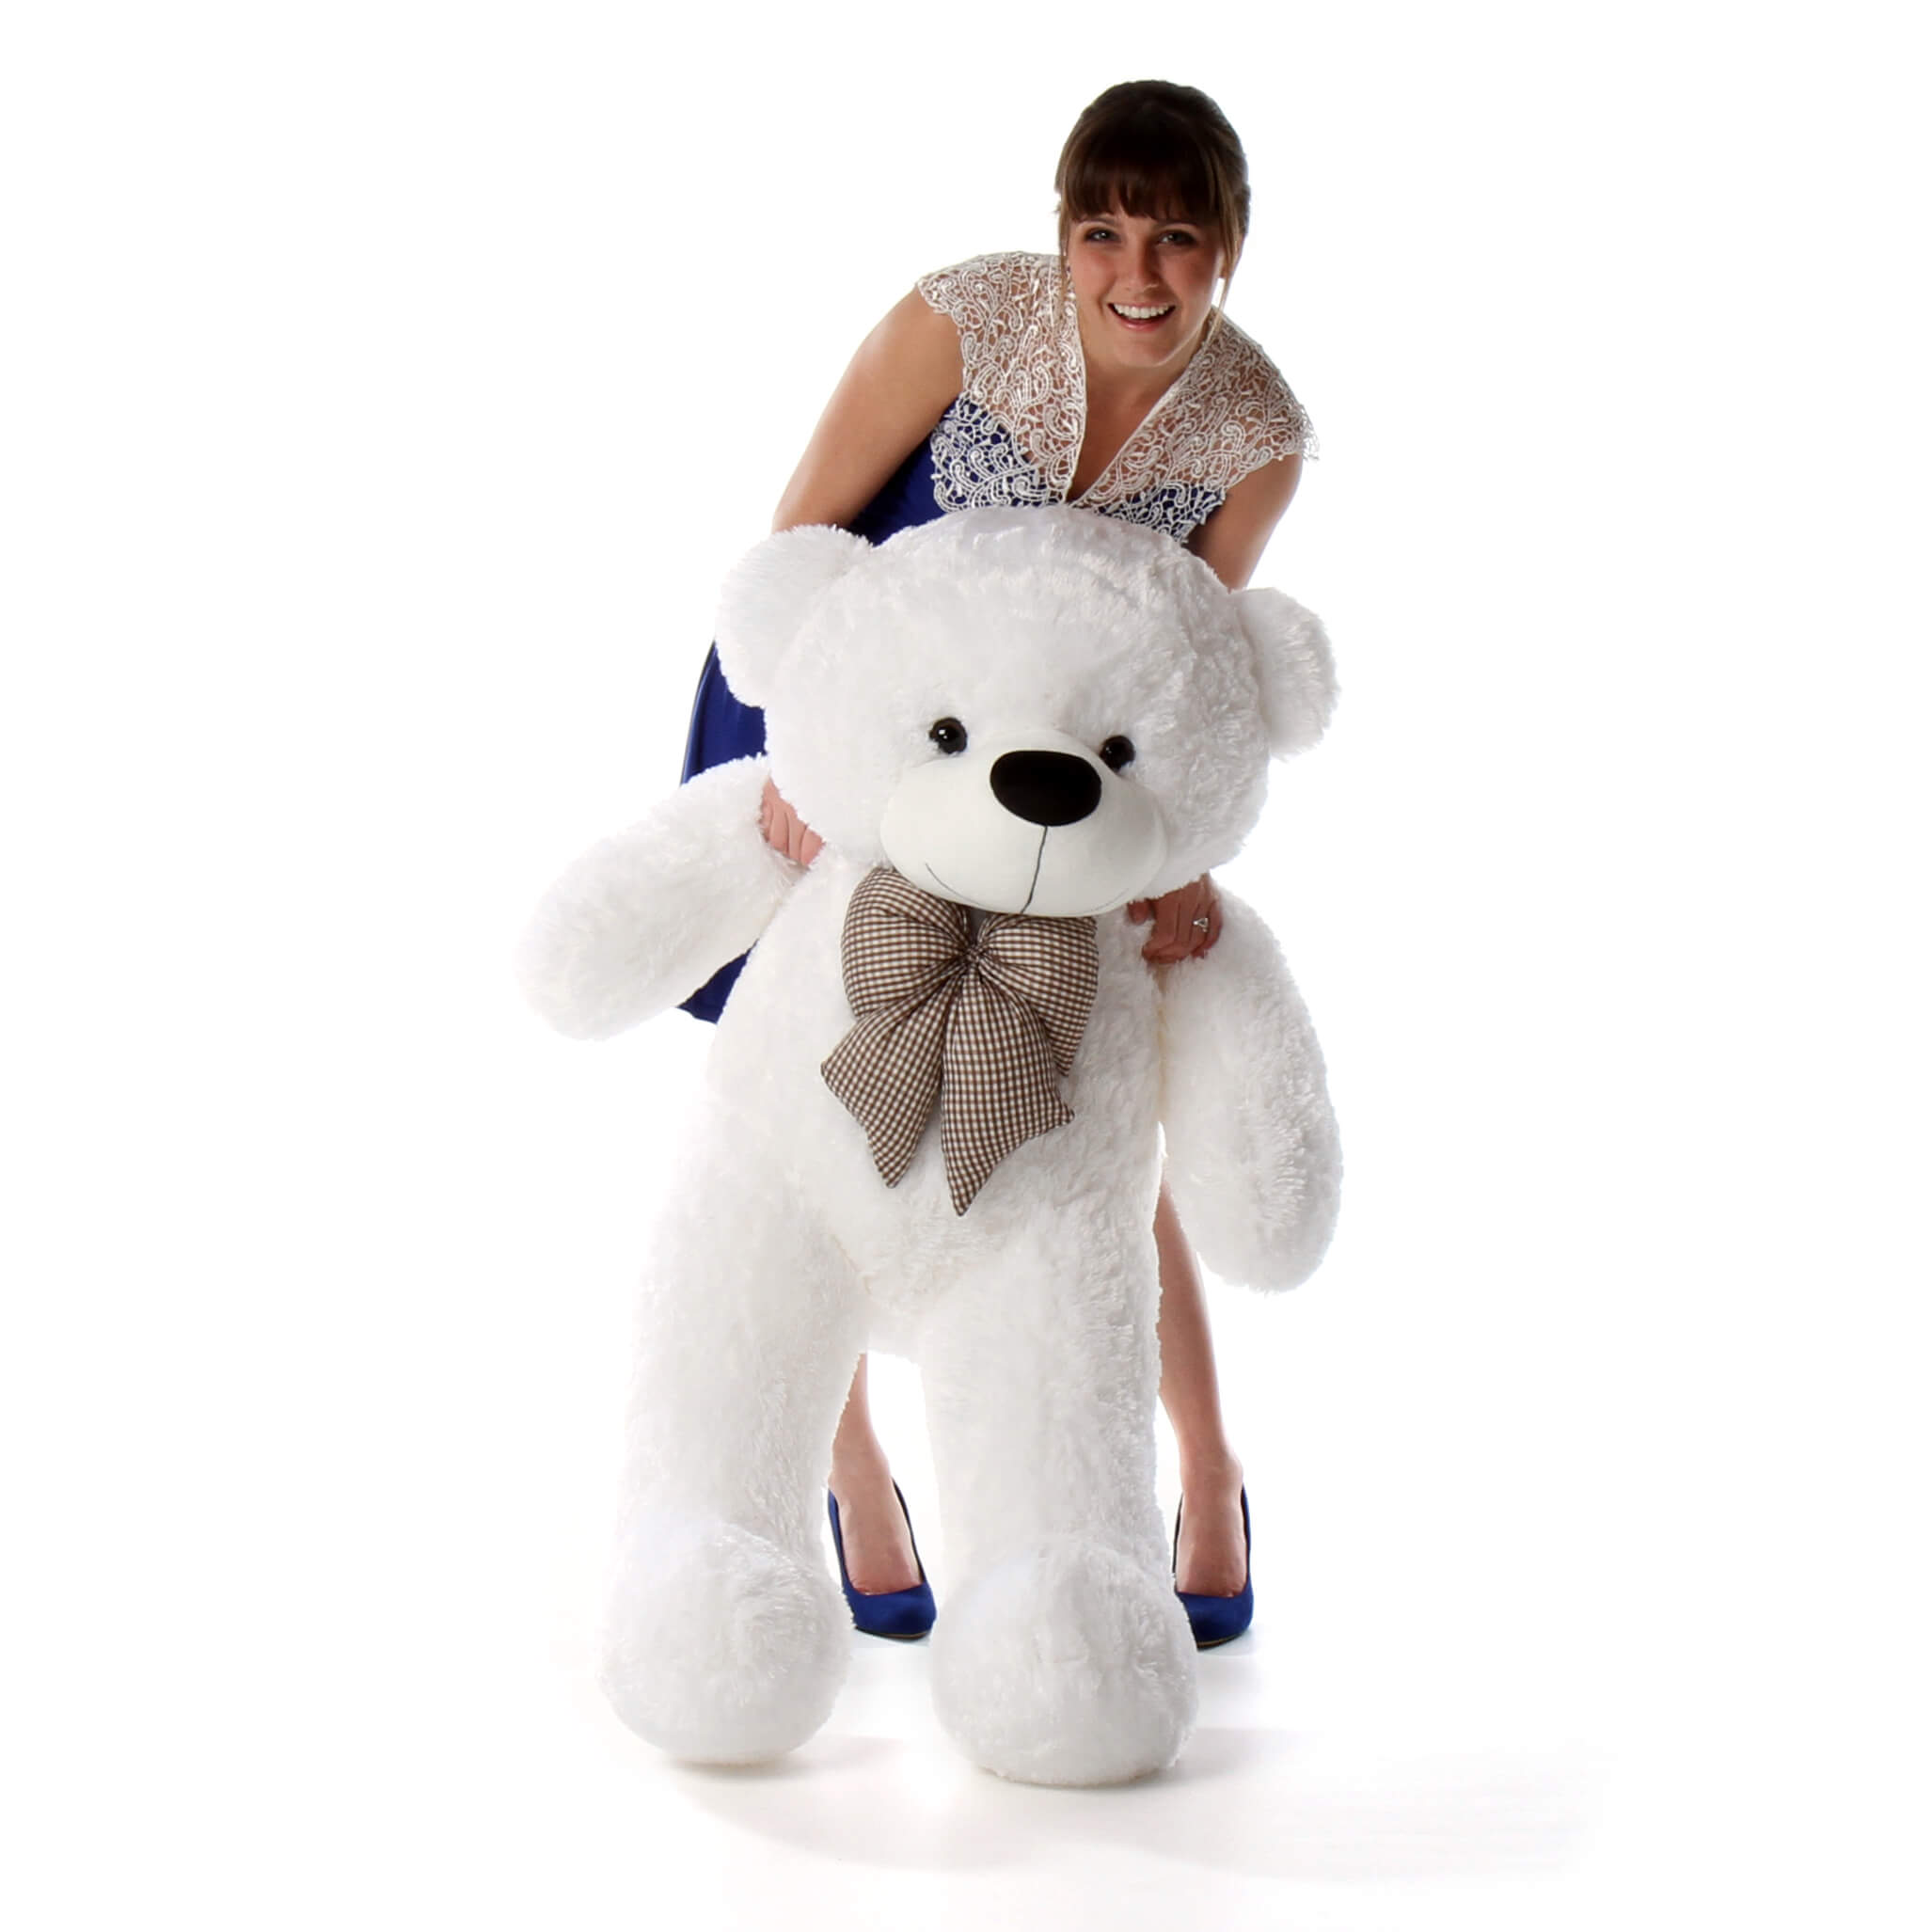 48in-life-size-teddy-bear-white-coco-cuddles-soft-gift-1.jpg